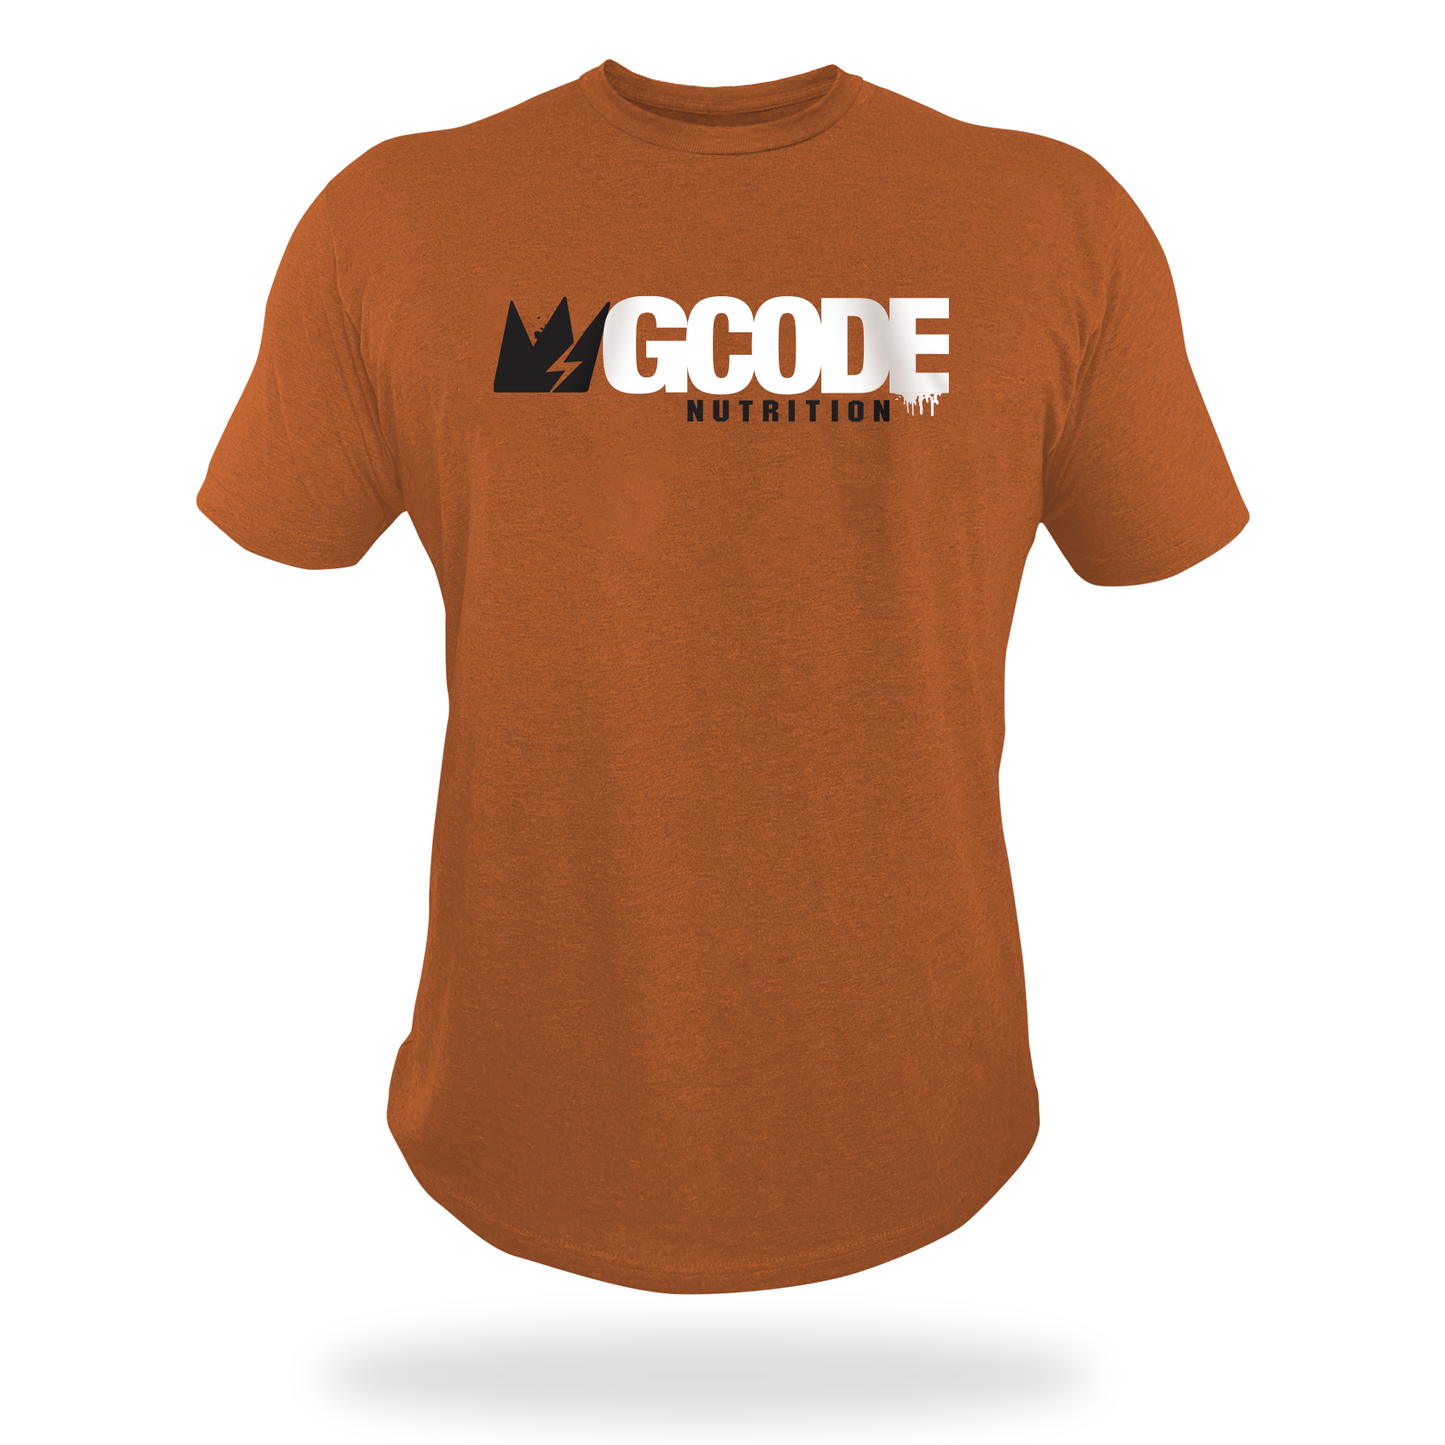 
                  
                    “Pursue Lifelong Domination” Logo Shirt (Orange Rust)
                  
                